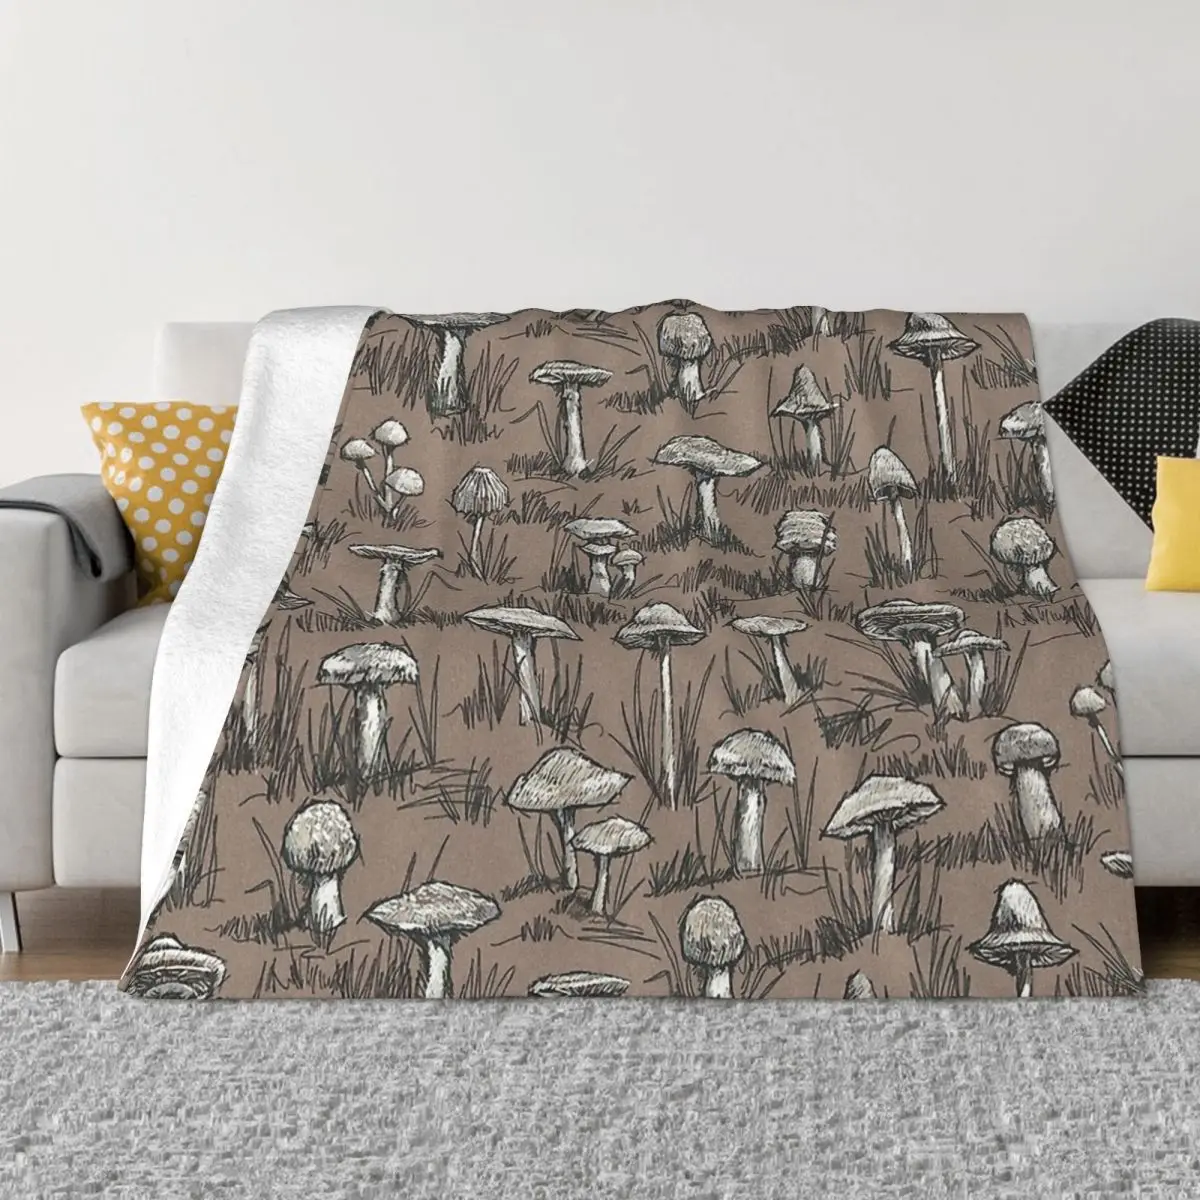 

Mushroom Mushrooms Forest Wild Sketchbook Pattern Portable Warm Throw Blankets for Bedding Travel